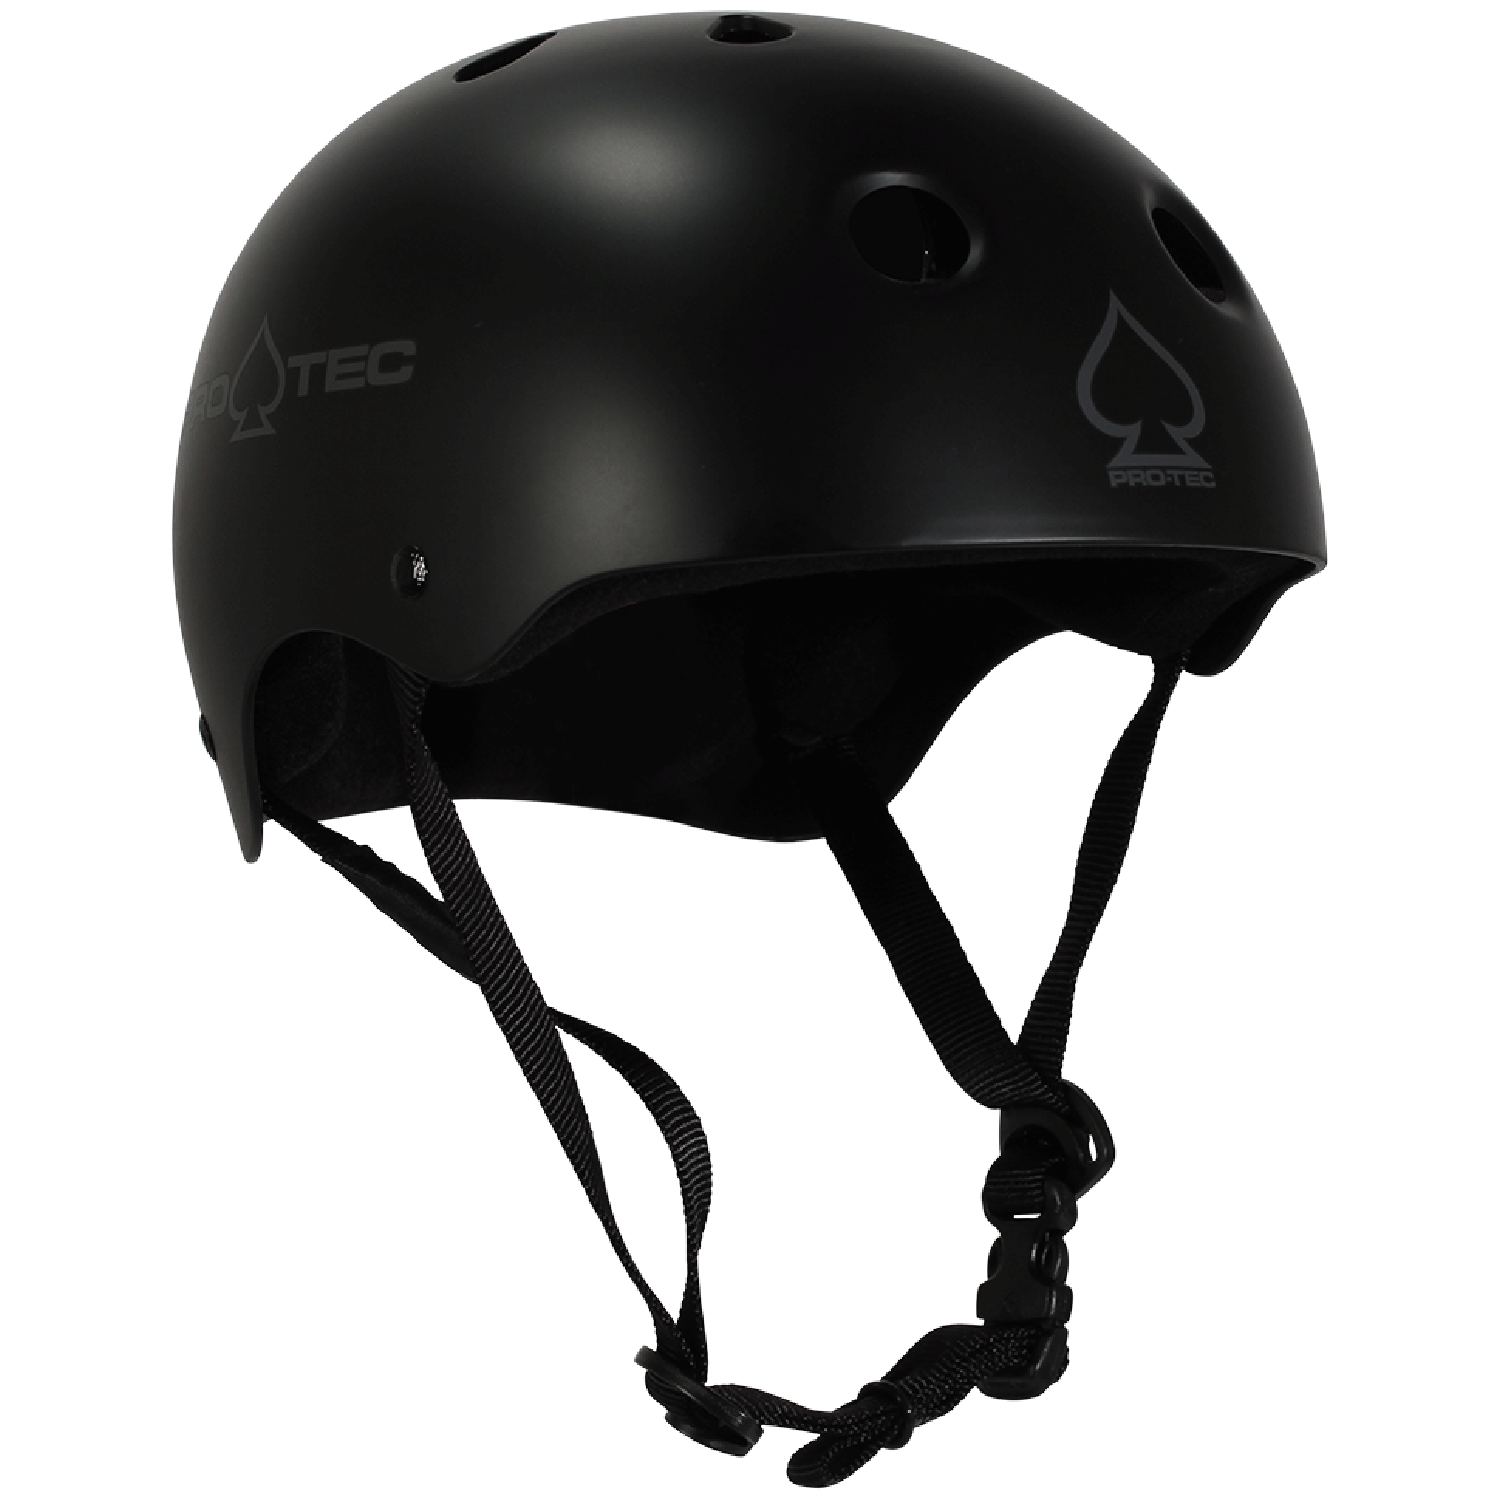 Matte Pink, X-Small Pro-Tec Classic Certified Skate Helmet